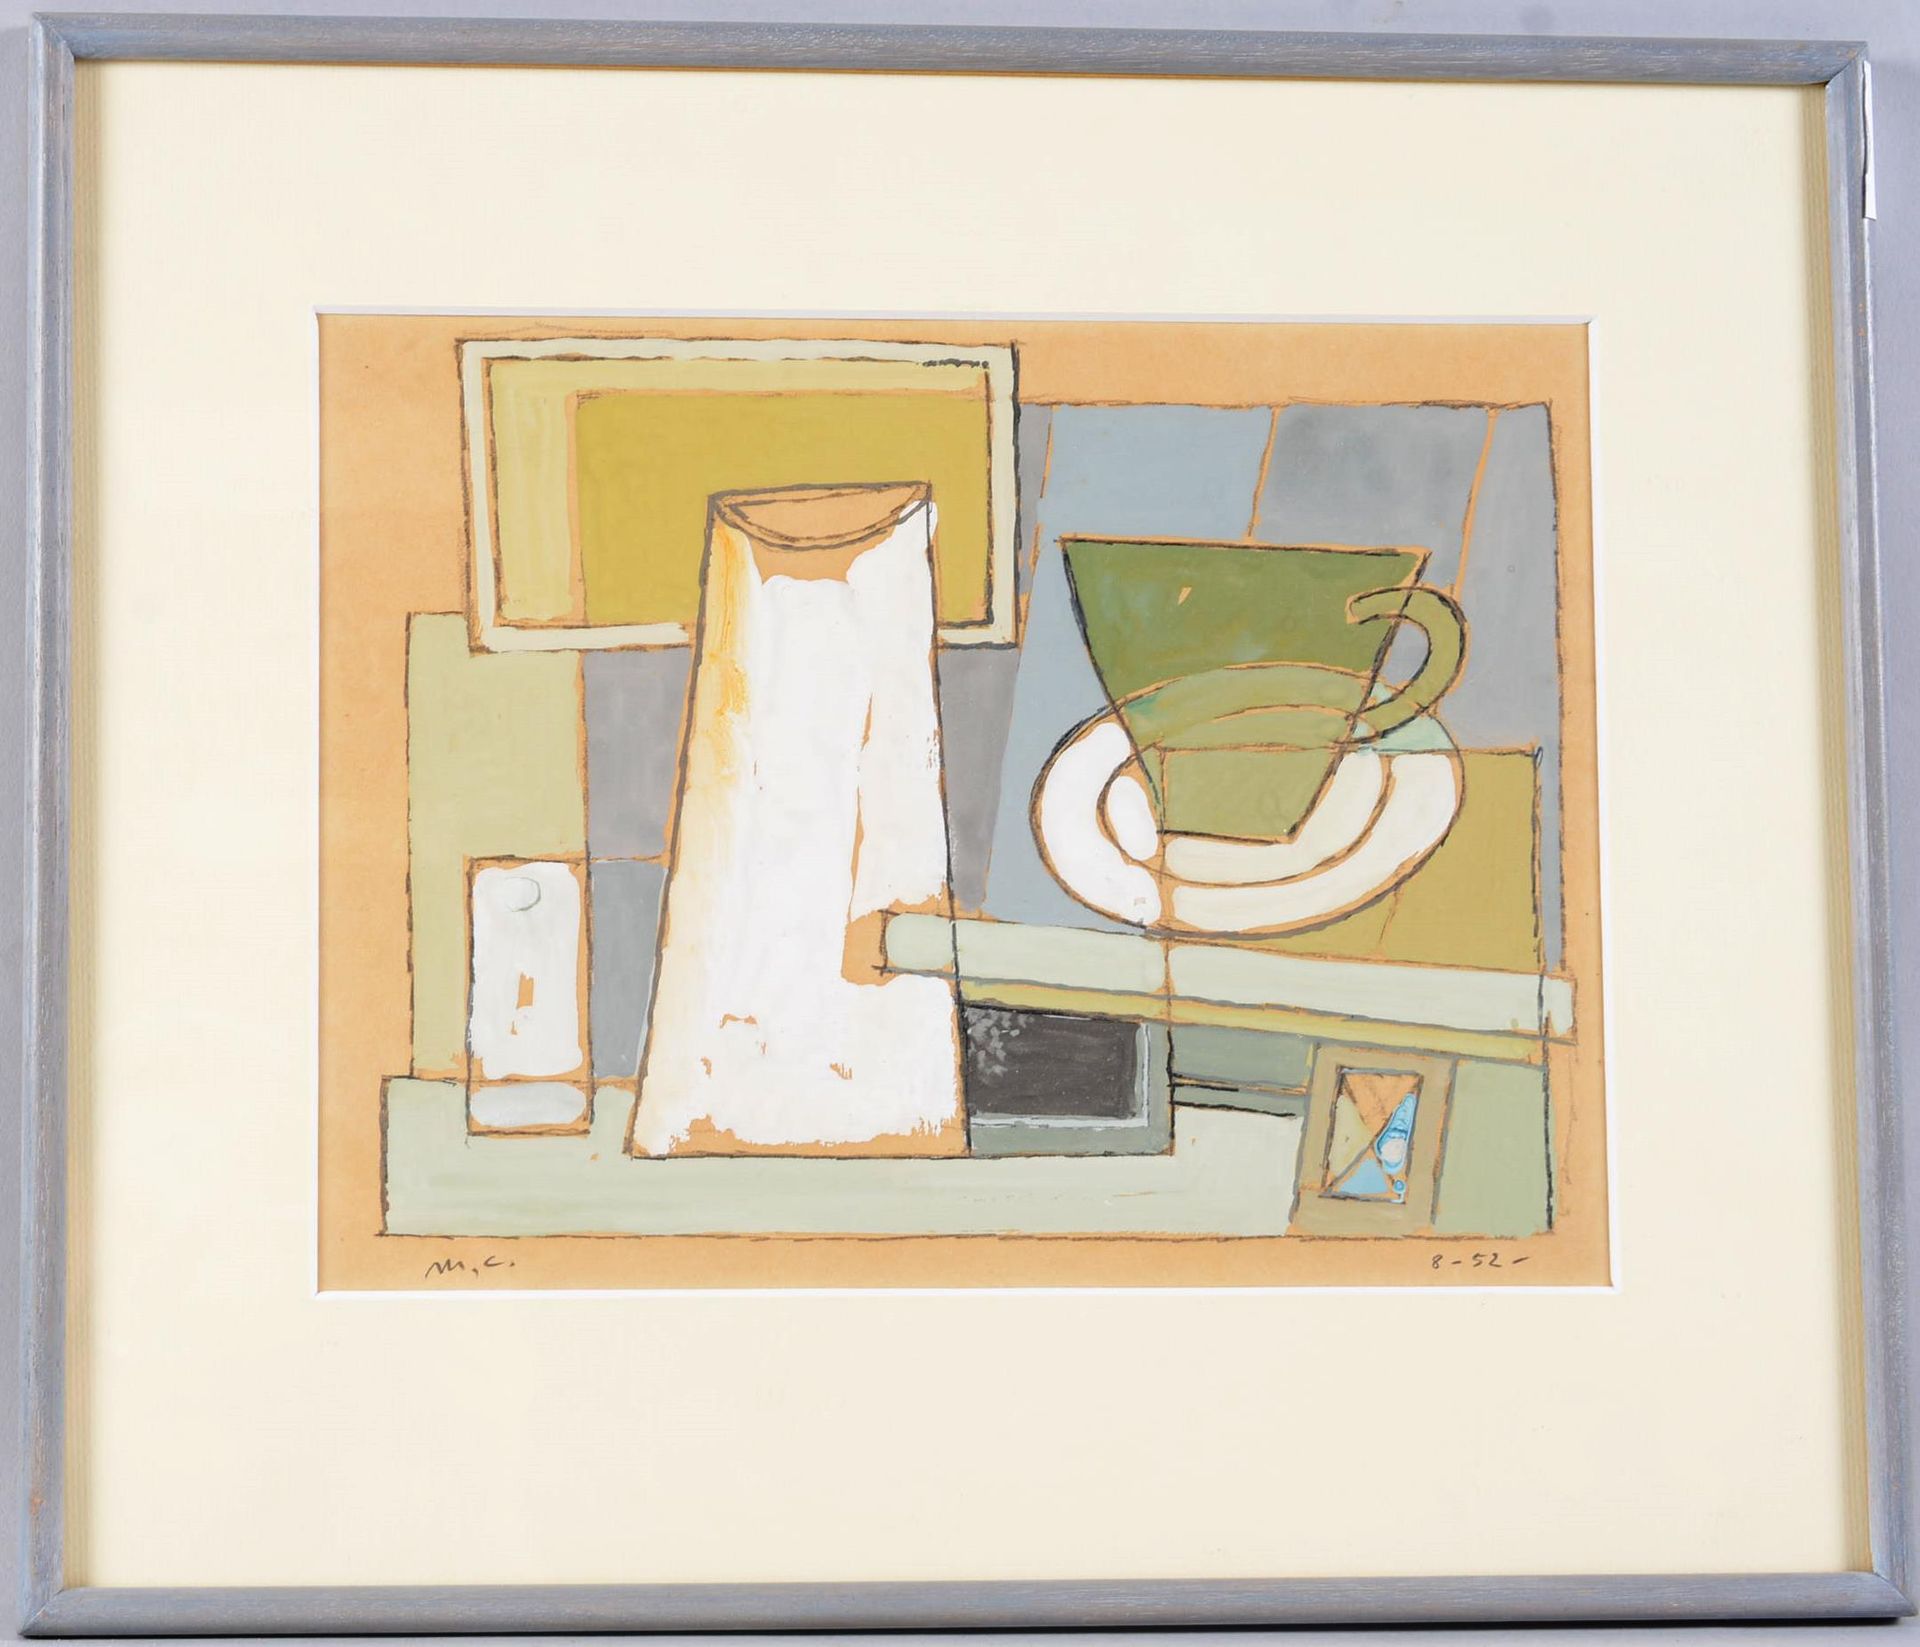 Marcel CARON (1890-1961) 马塞尔-卡隆(1890-1961)

"抽象构成"。

橙色纸上的水粉画，右下方有签名，日期为8-52。

尺&hellip;